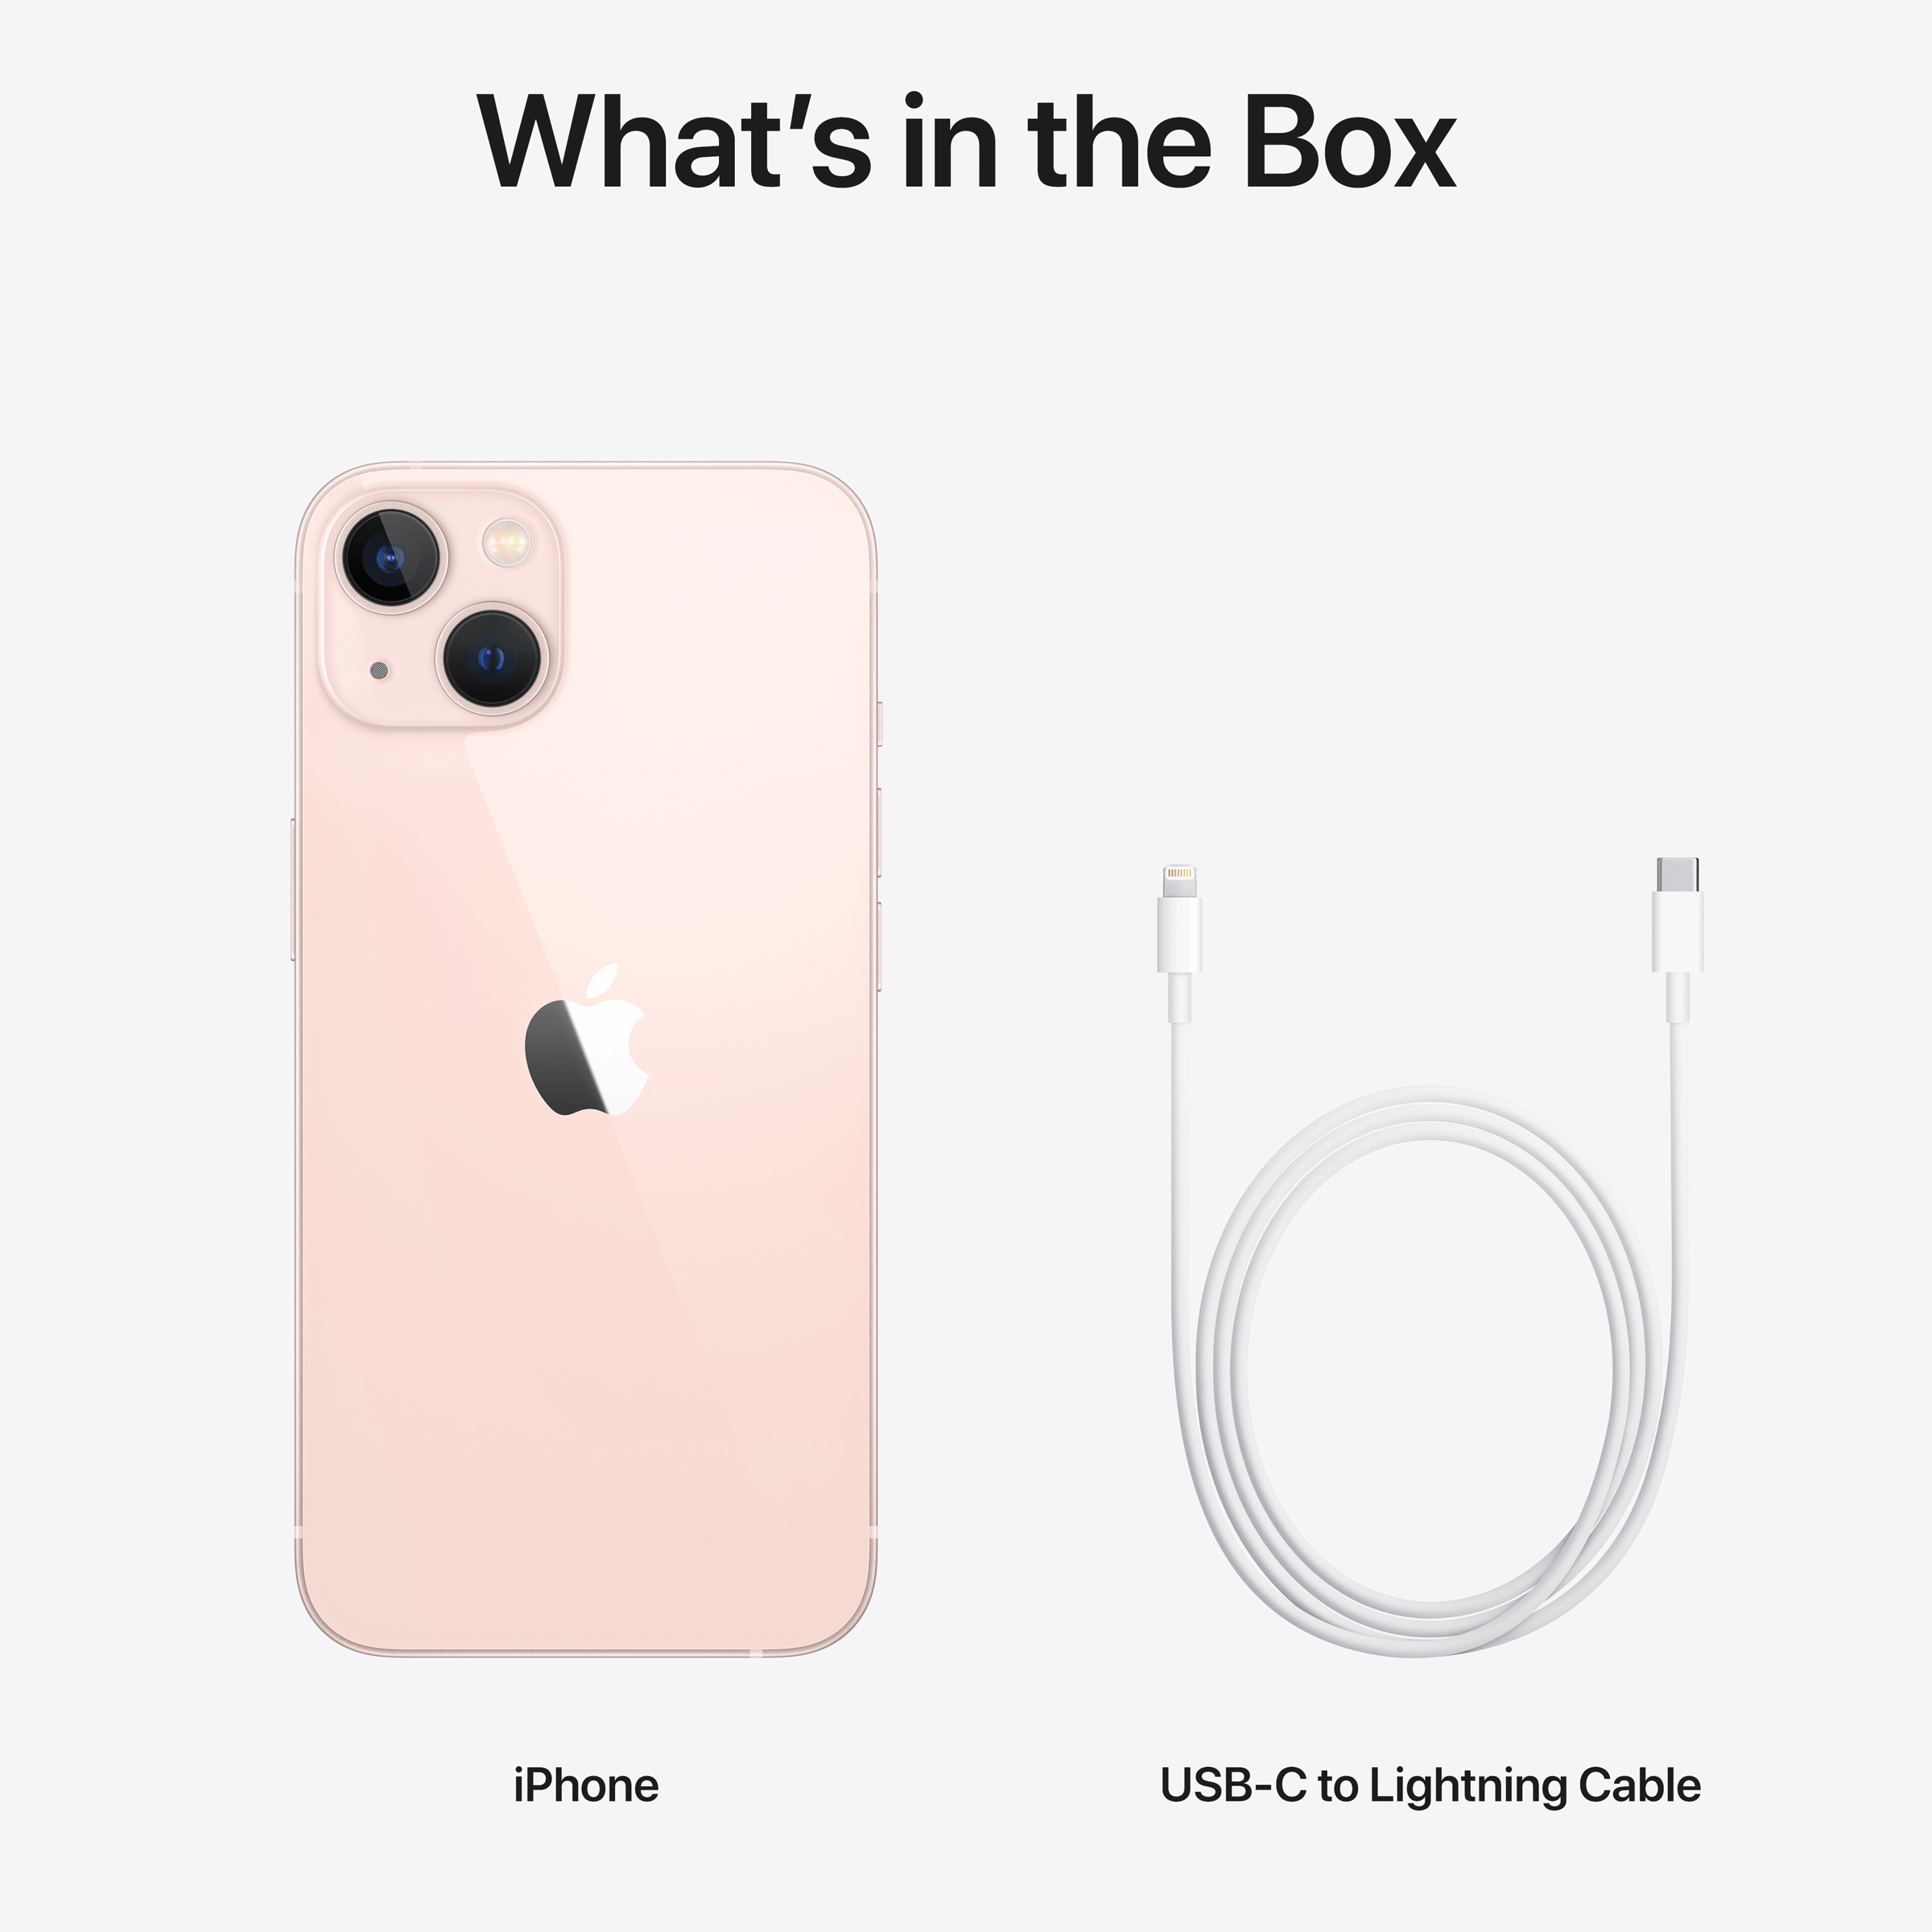 Apple iPhone 13 (128GB, Pink)_4